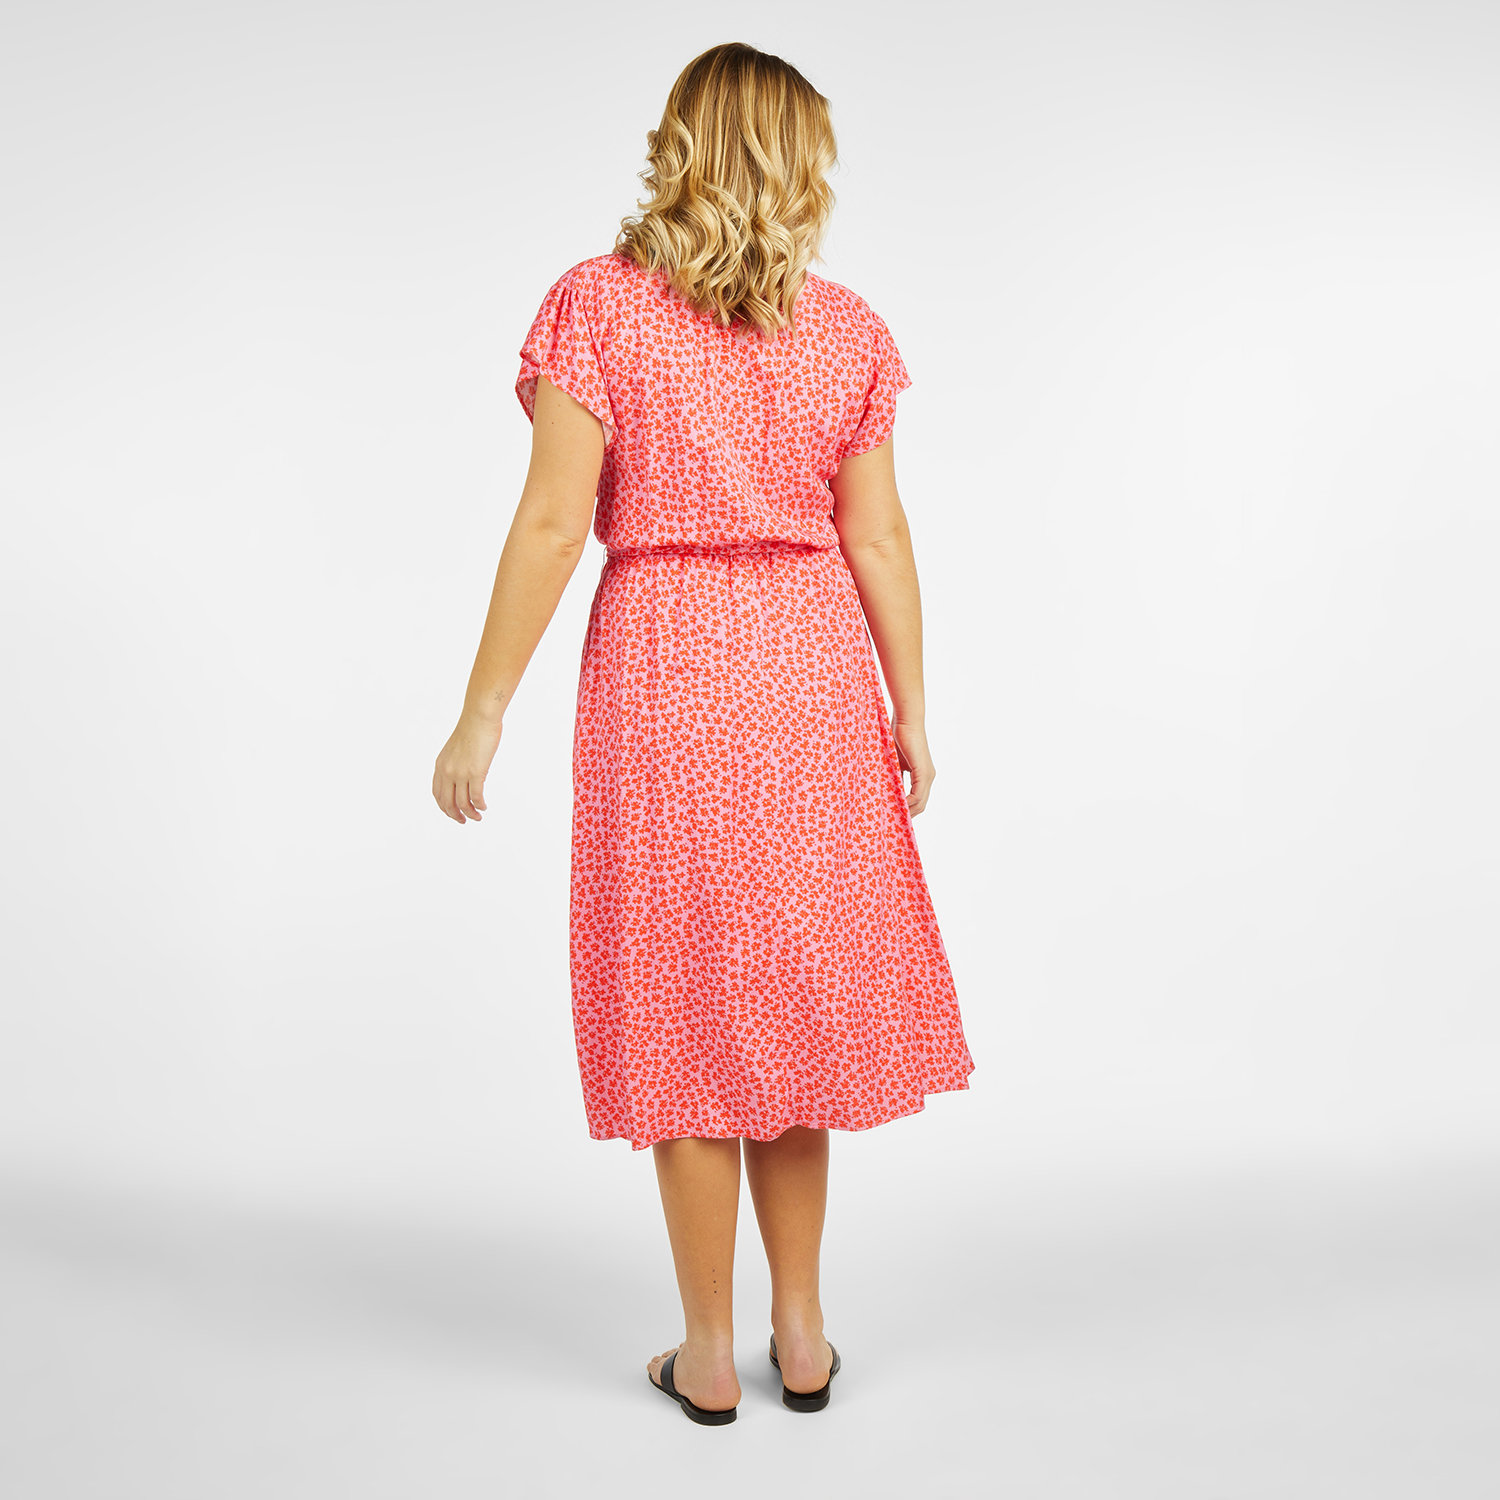 LovelySisters-Kathalea_LS-Kleid-pink geblümt-feminin-Bindegürtel-ausgestellter Rock